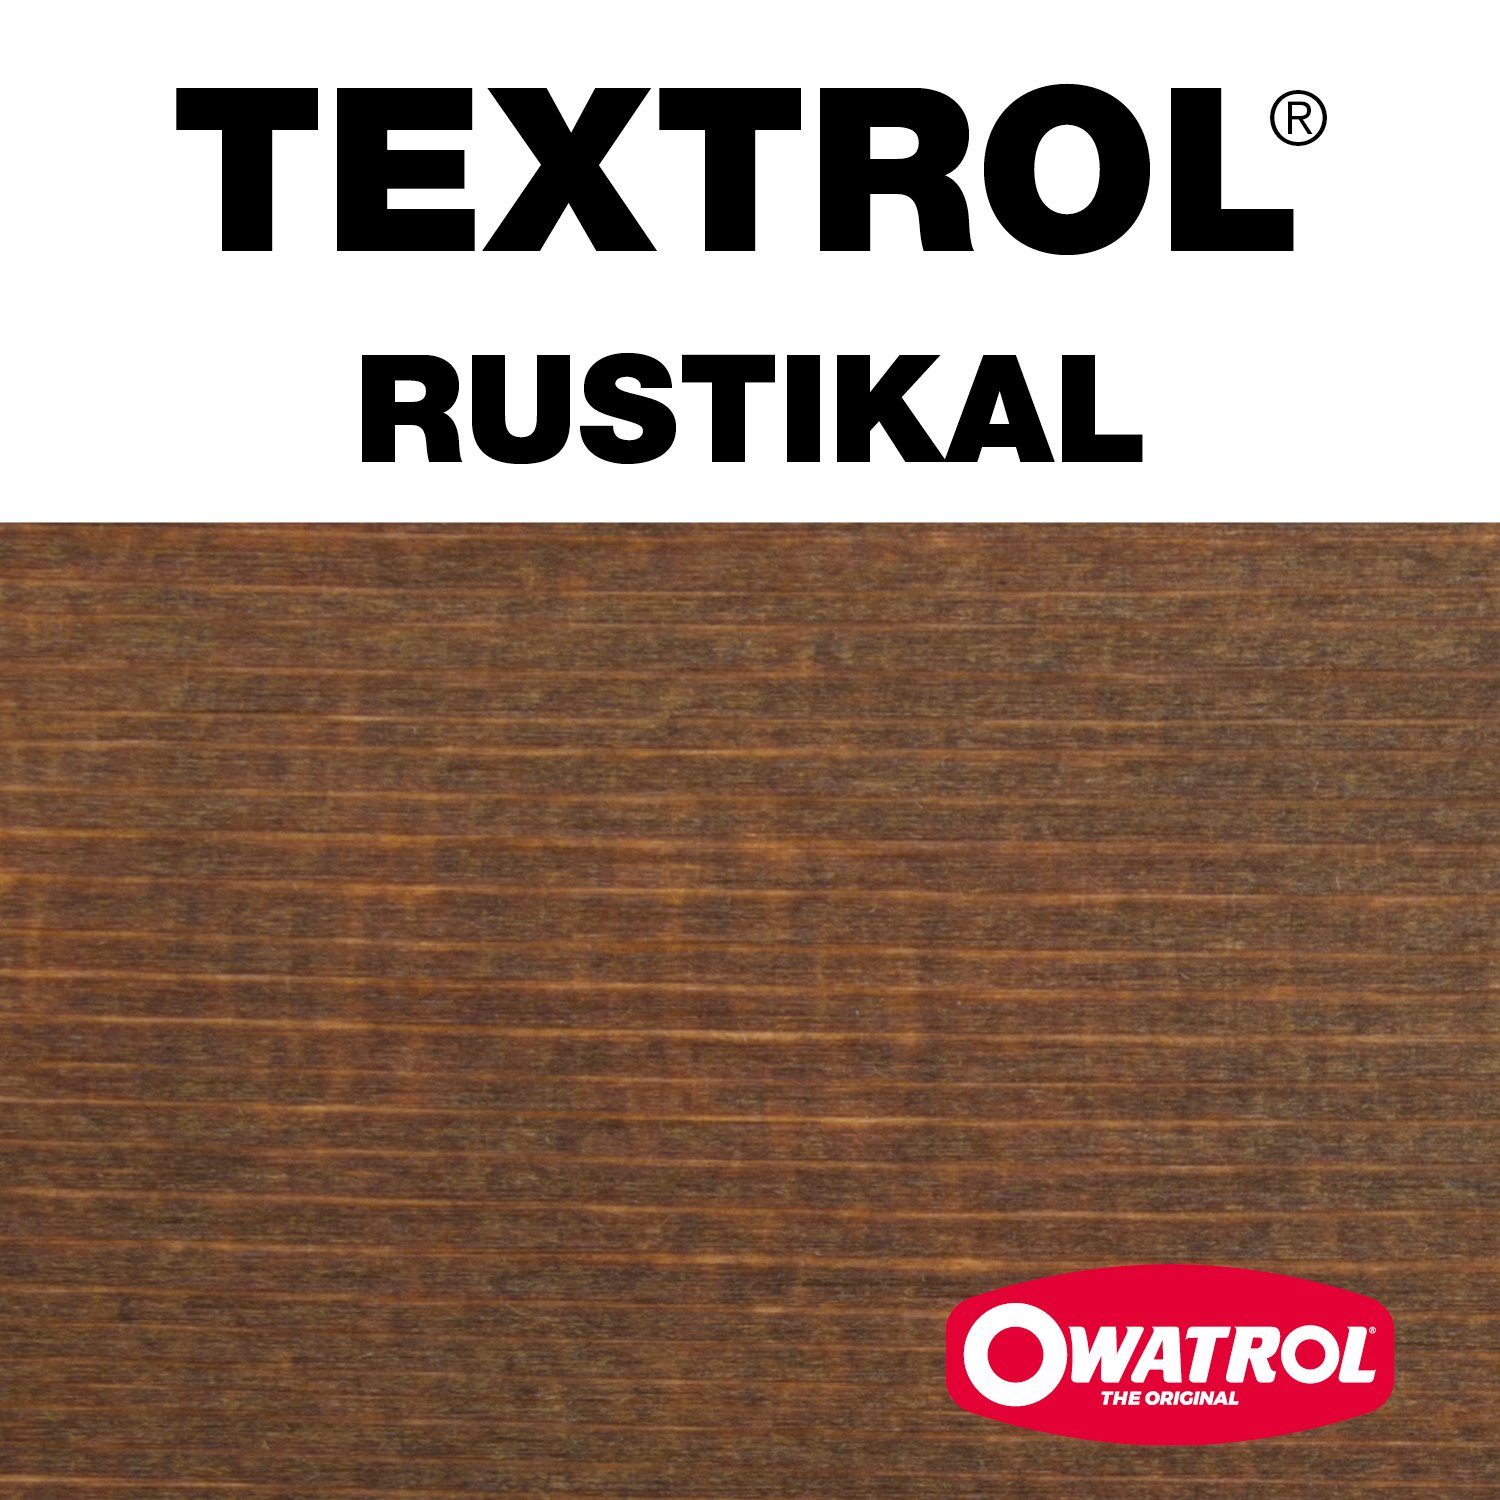 OWATROL Holzöl TEXTROL Holzöl für den [5L] Außenbereich - rustikal